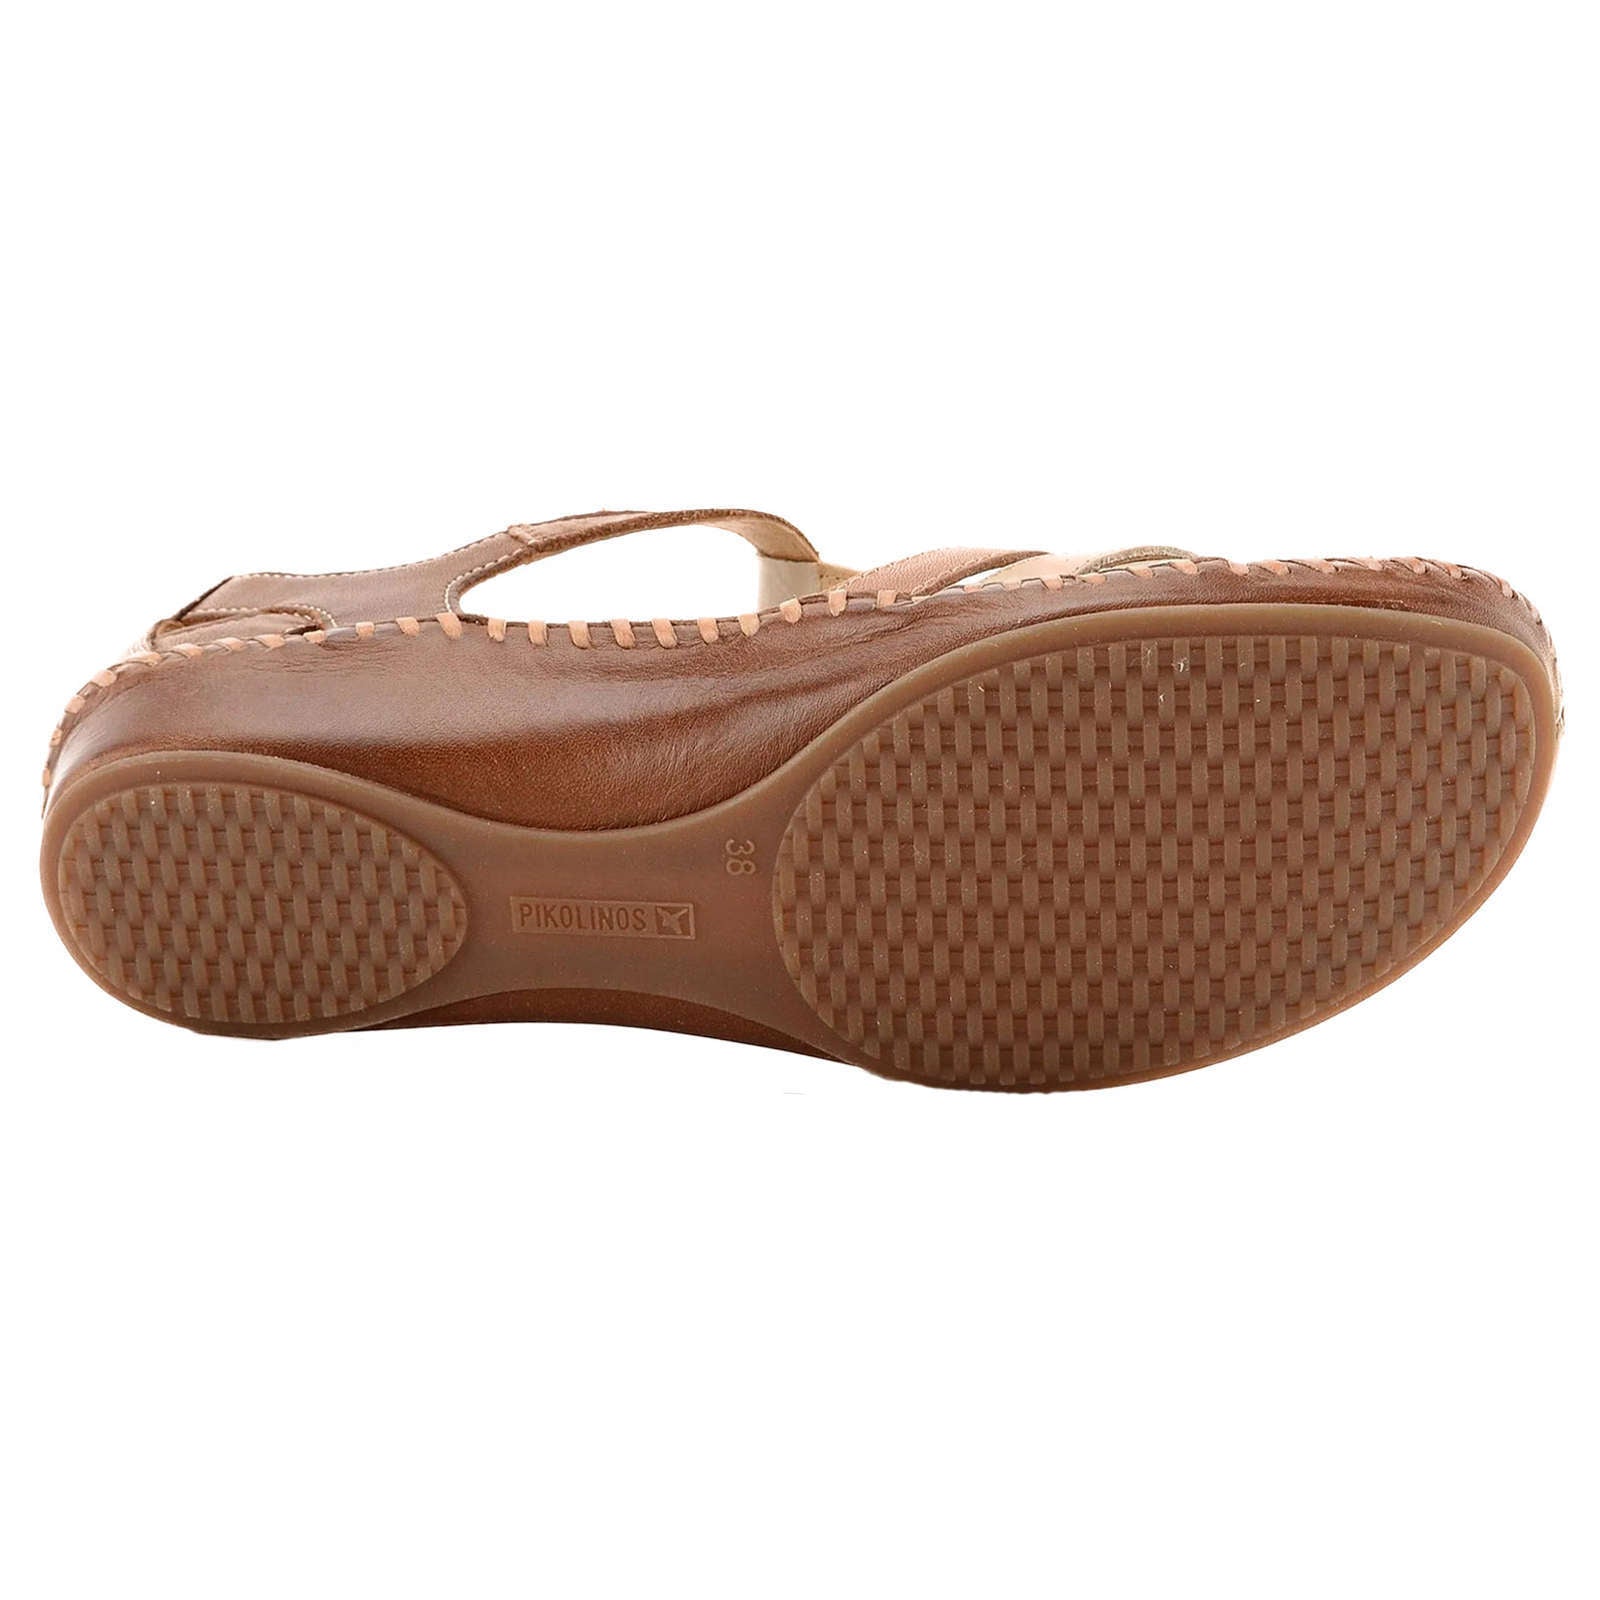 Pikolinos Puerto Vallarta 655 Leather Womens Sandals#color_marfil